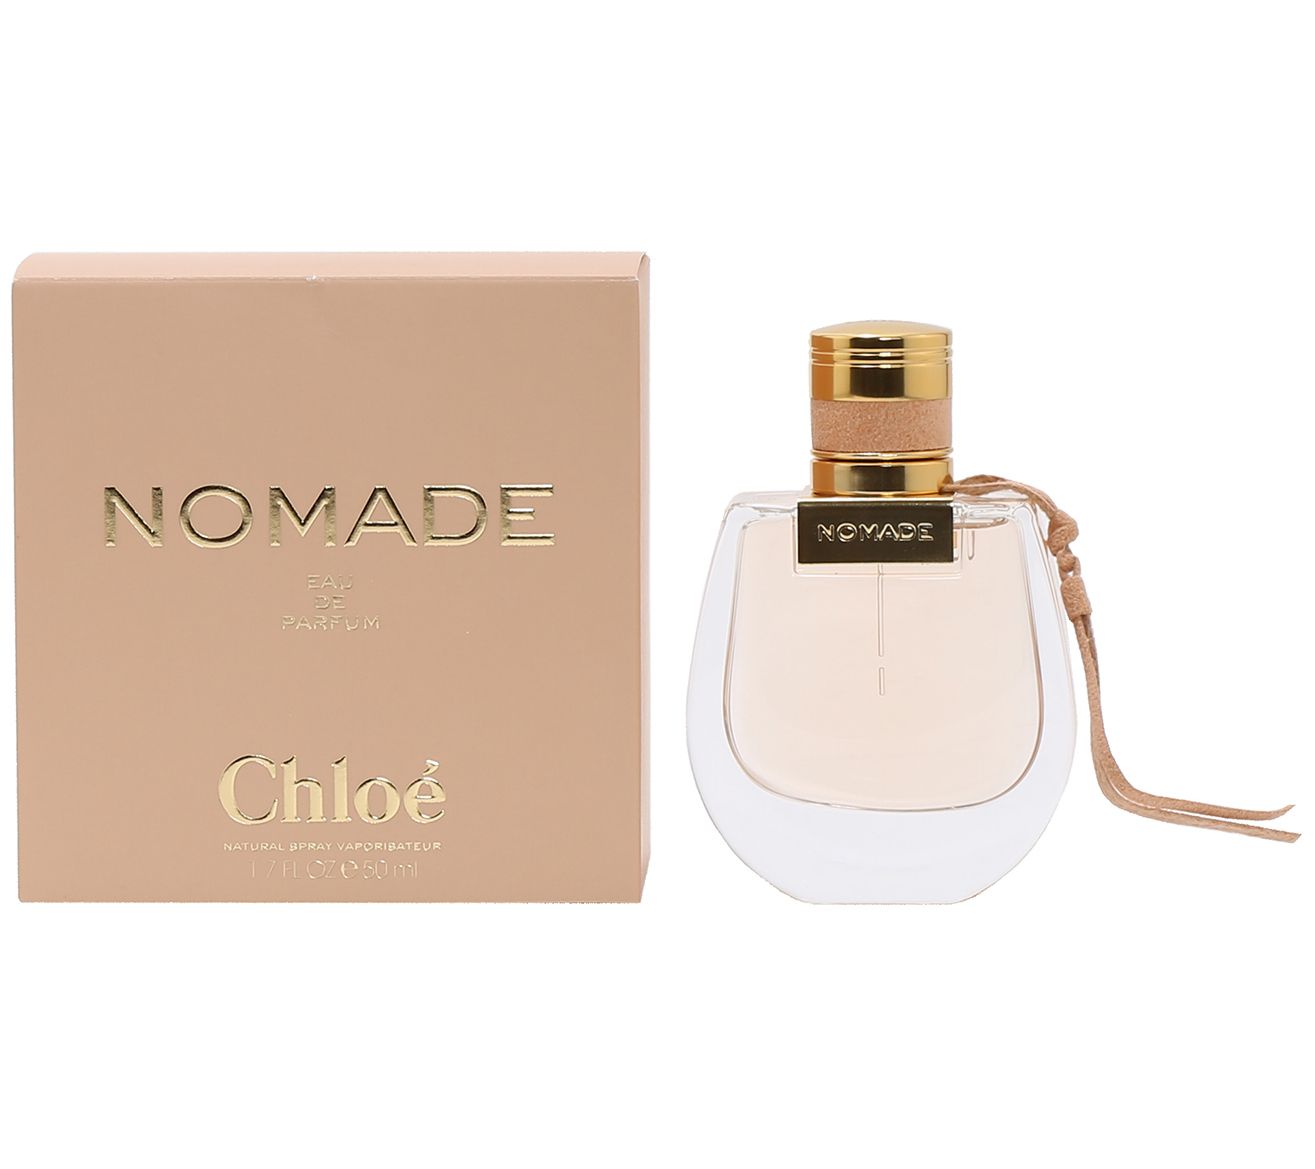 Chloe Nomade Ladies Eau de oz Parfum Spray 1.7